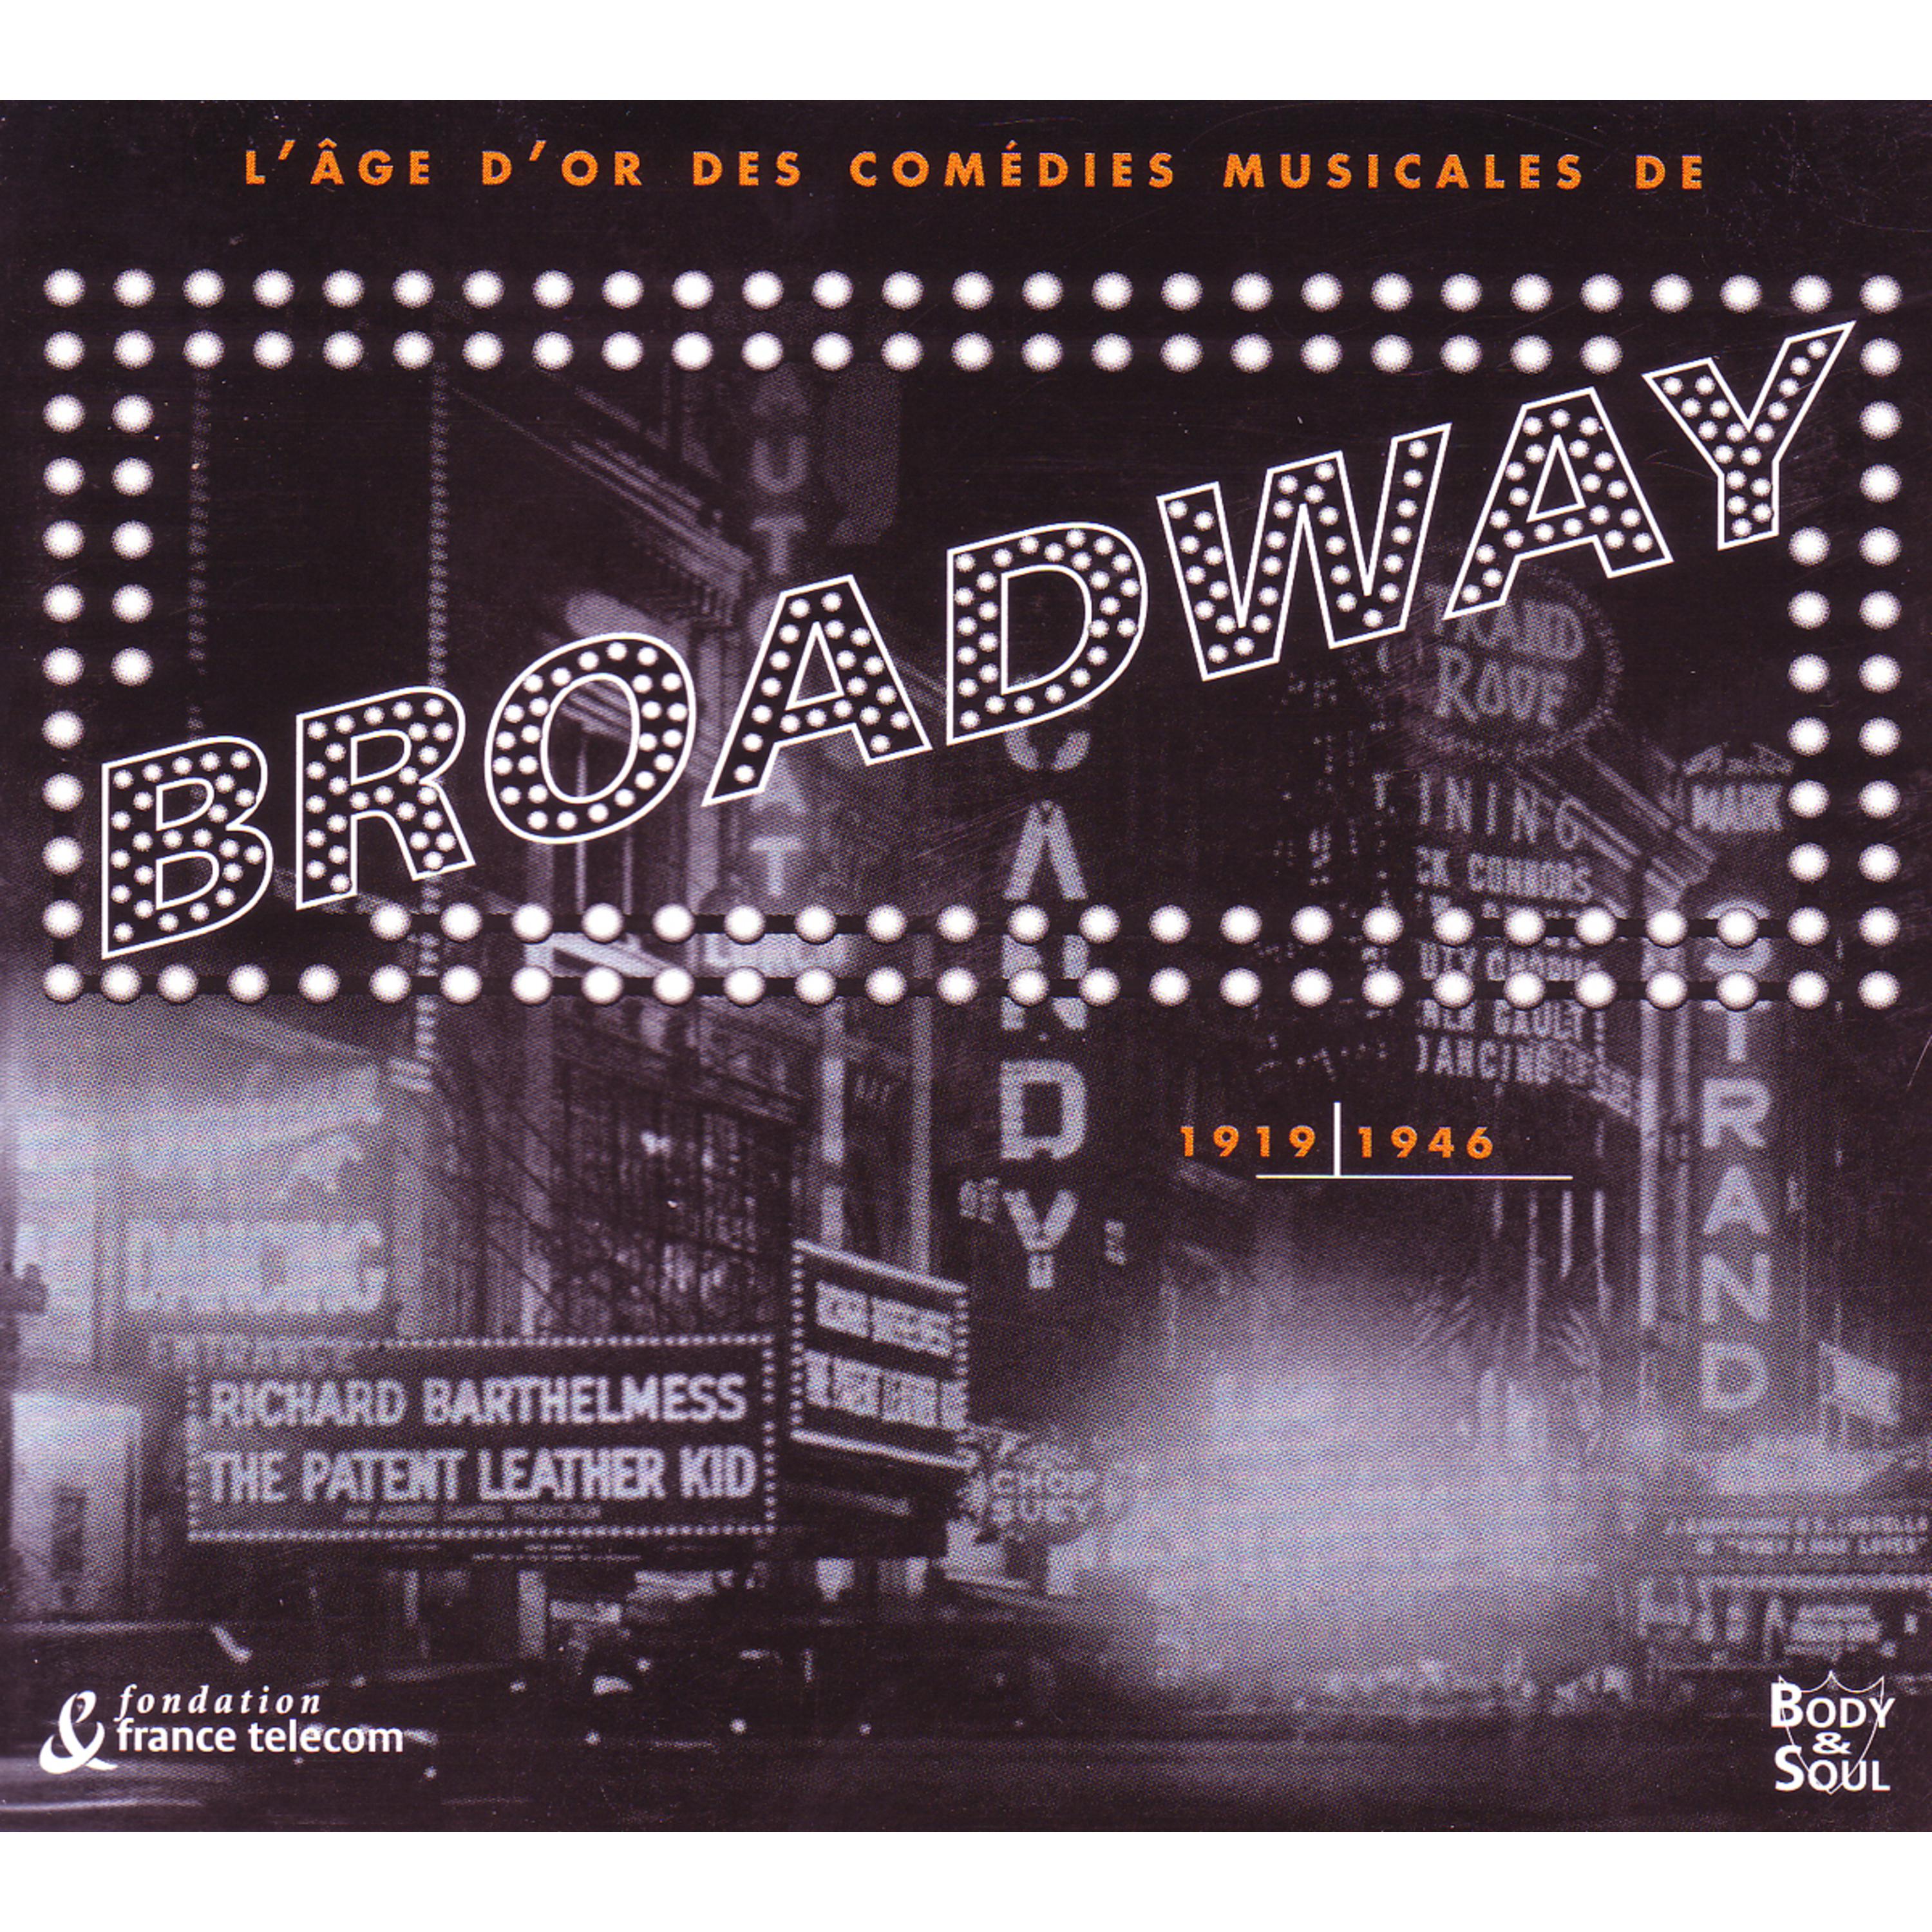 Broadway (1919 - 1946)